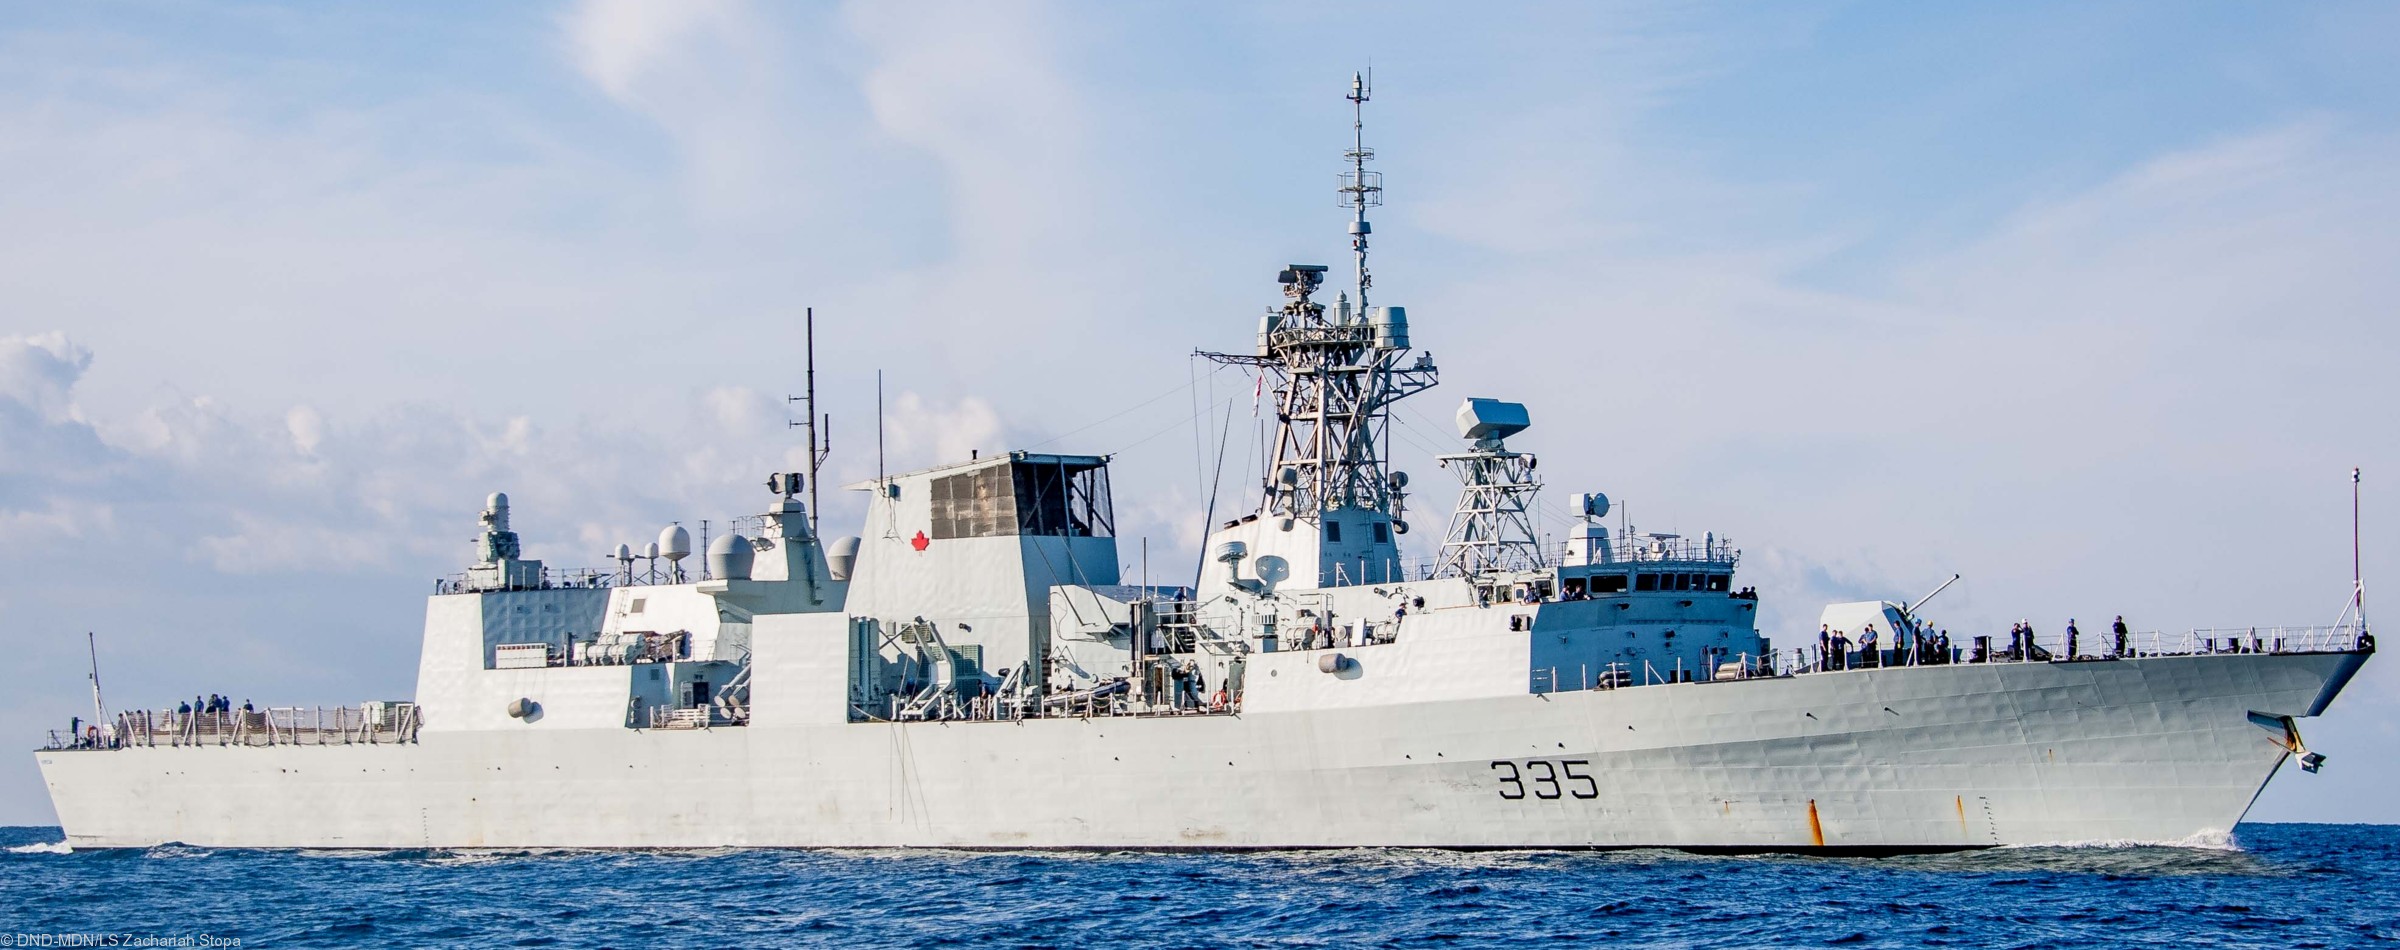 ffh-335 hmcs calgary halifax class helicopter patrol frigate ncsm royal canadian navy 66